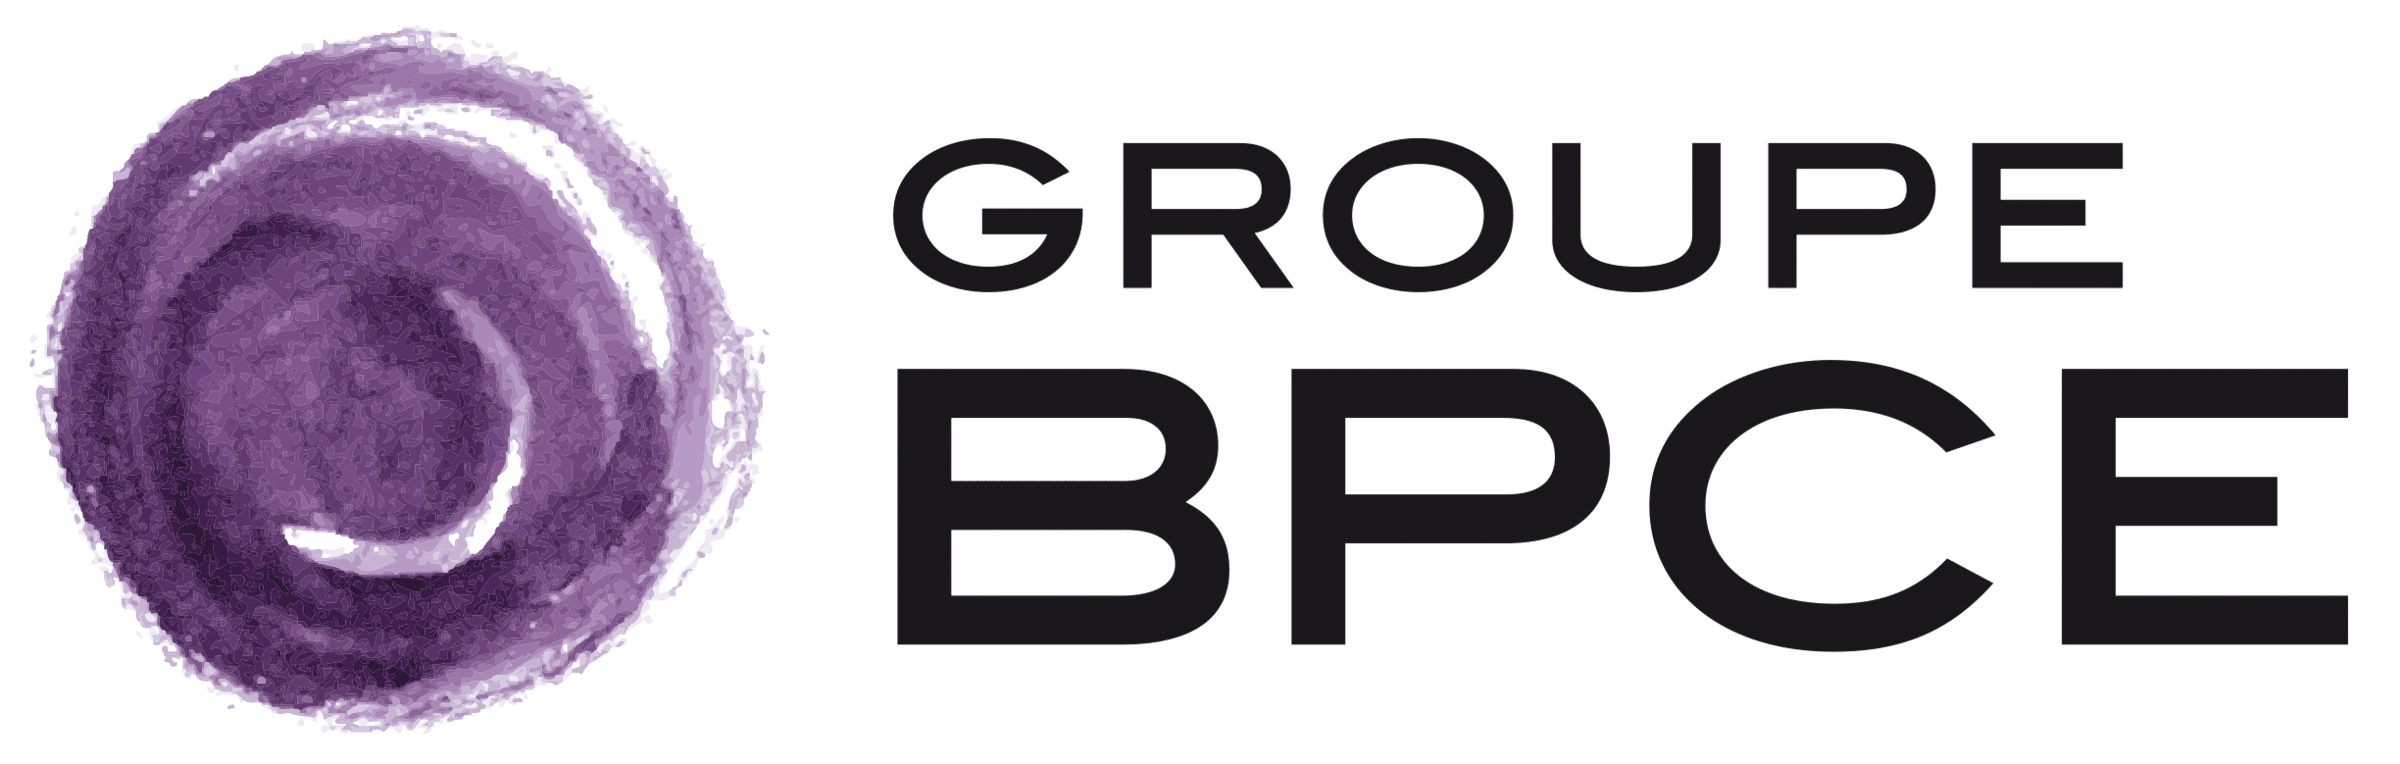 Groupe BPCE-Logo